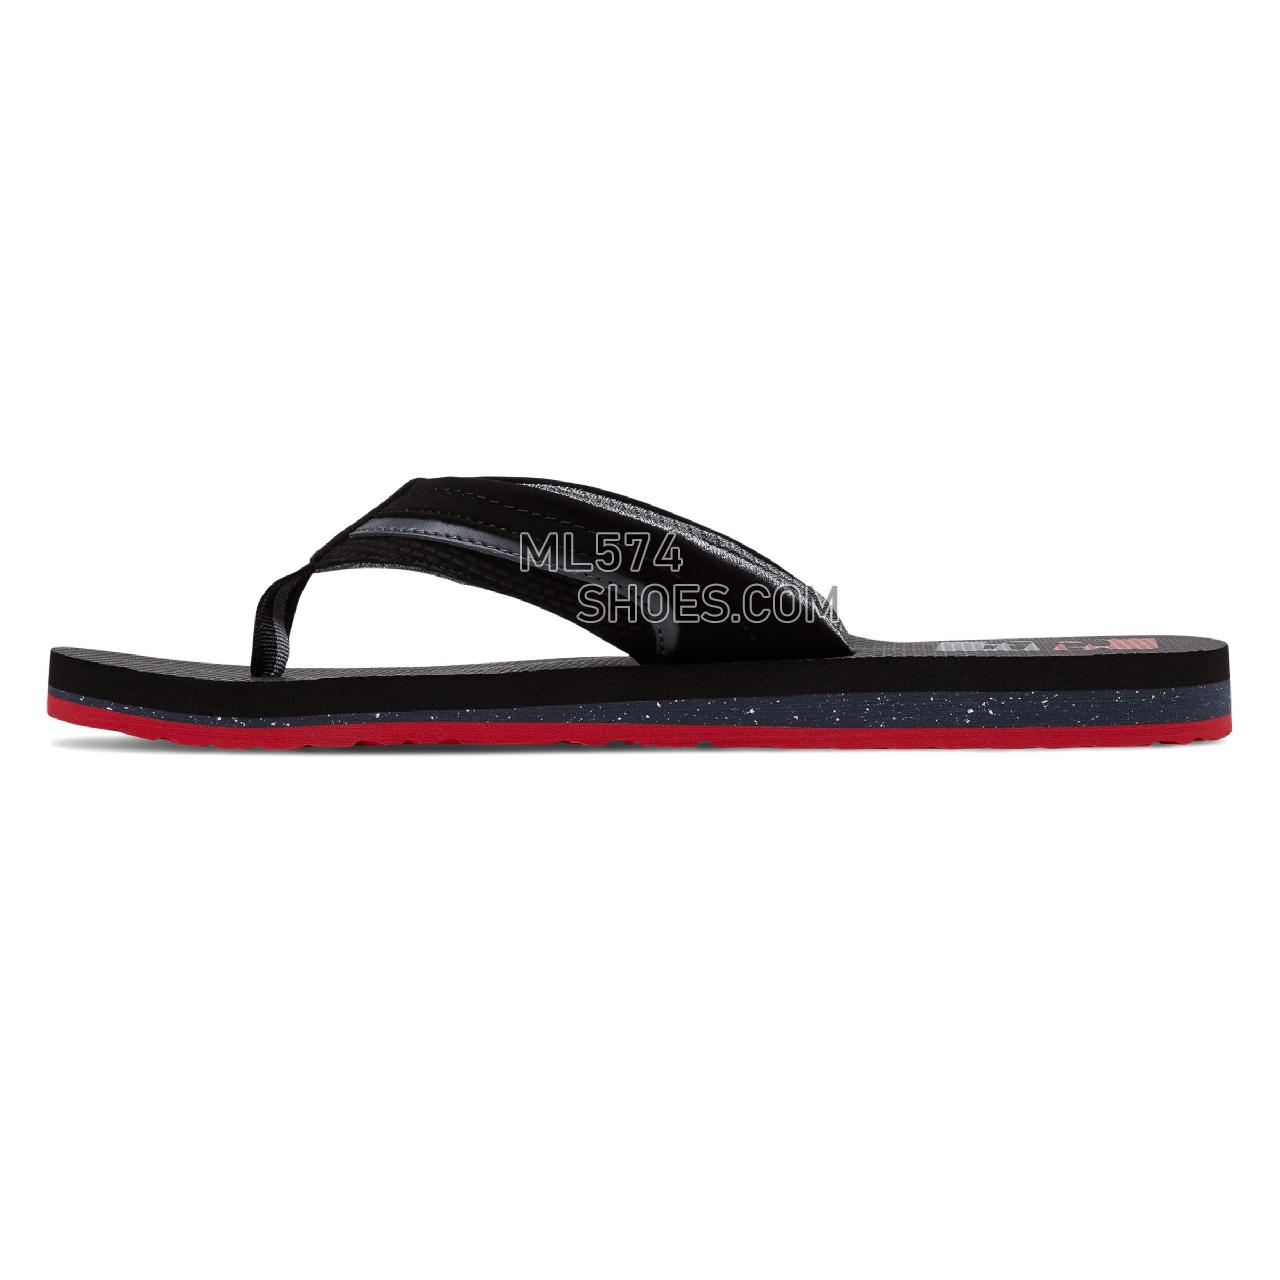 New Balance Brighton Thong - Men's 6079 - Sandals Black with Red - M6079BRD